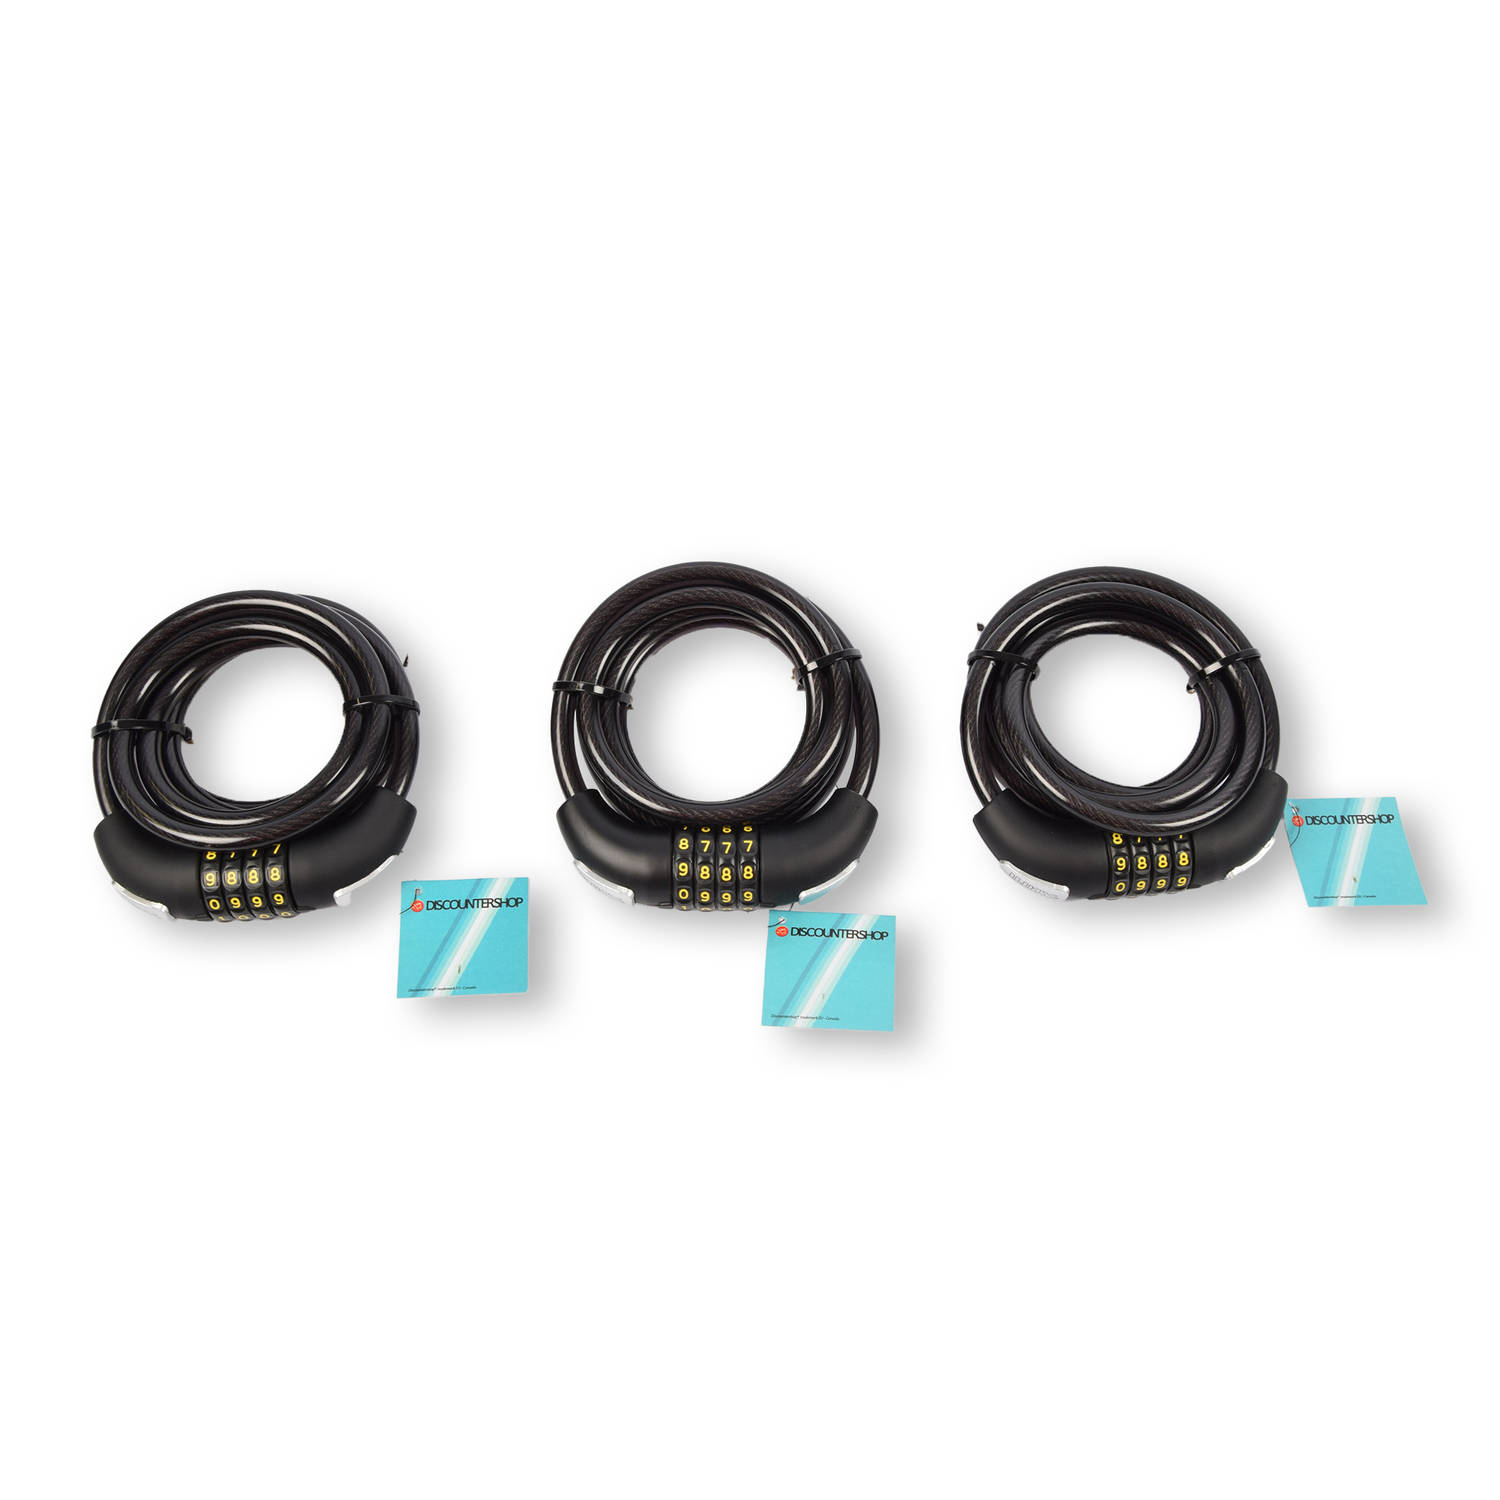 3x Topkwaliteit Zwarte Fietssloten Set met Cijfer- en Kabelslot - Anti-Diefstal, Lichtgewicht (255g), 180cm x 10mm